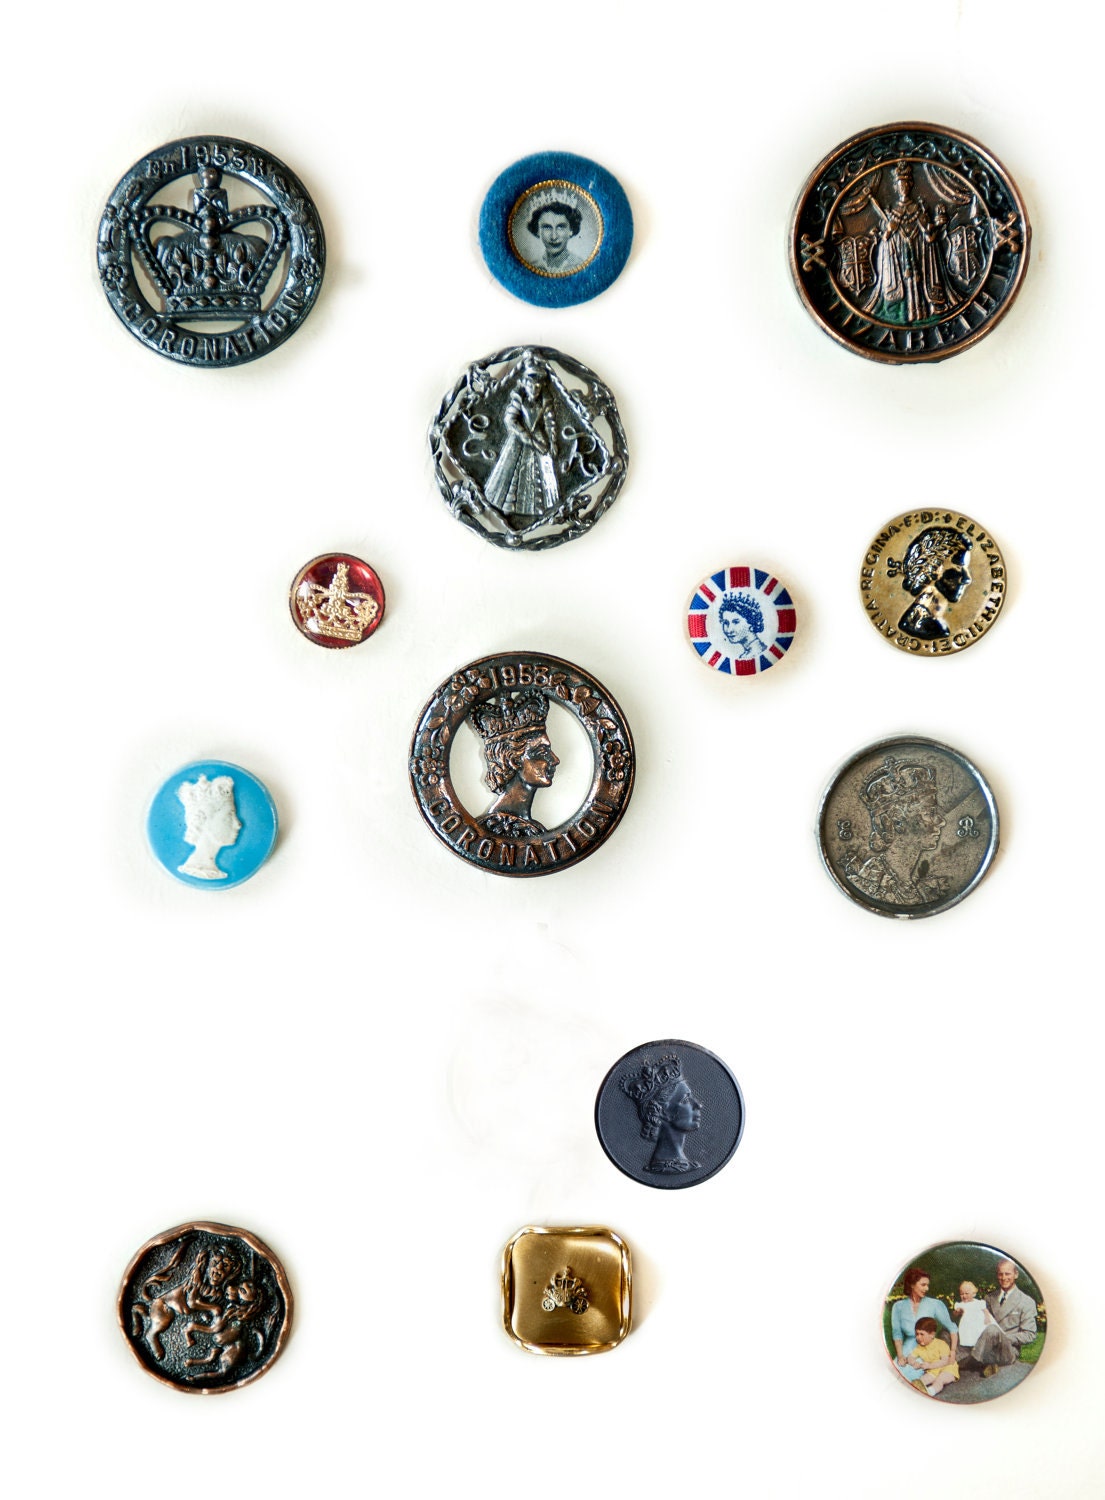 1953 VINTAGE Button Collection